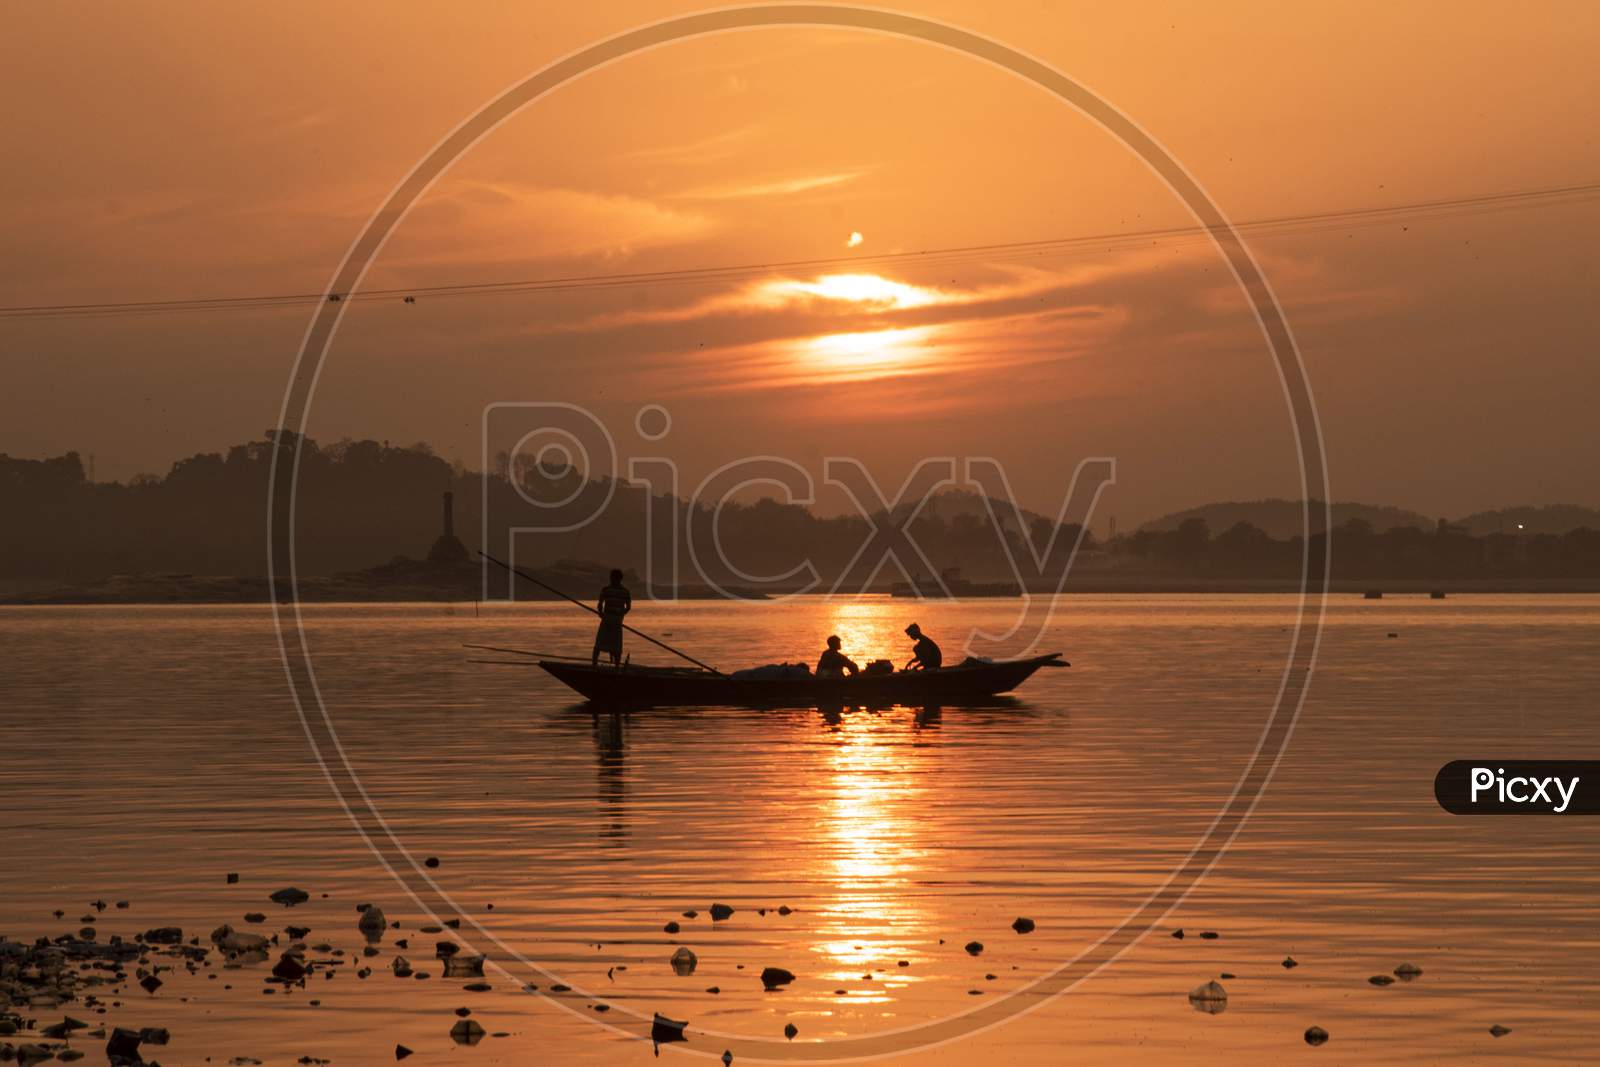 Fishermen Fishing In The Brahmaputra River At Sunset, In Guwahati On 29 Feb. 2020